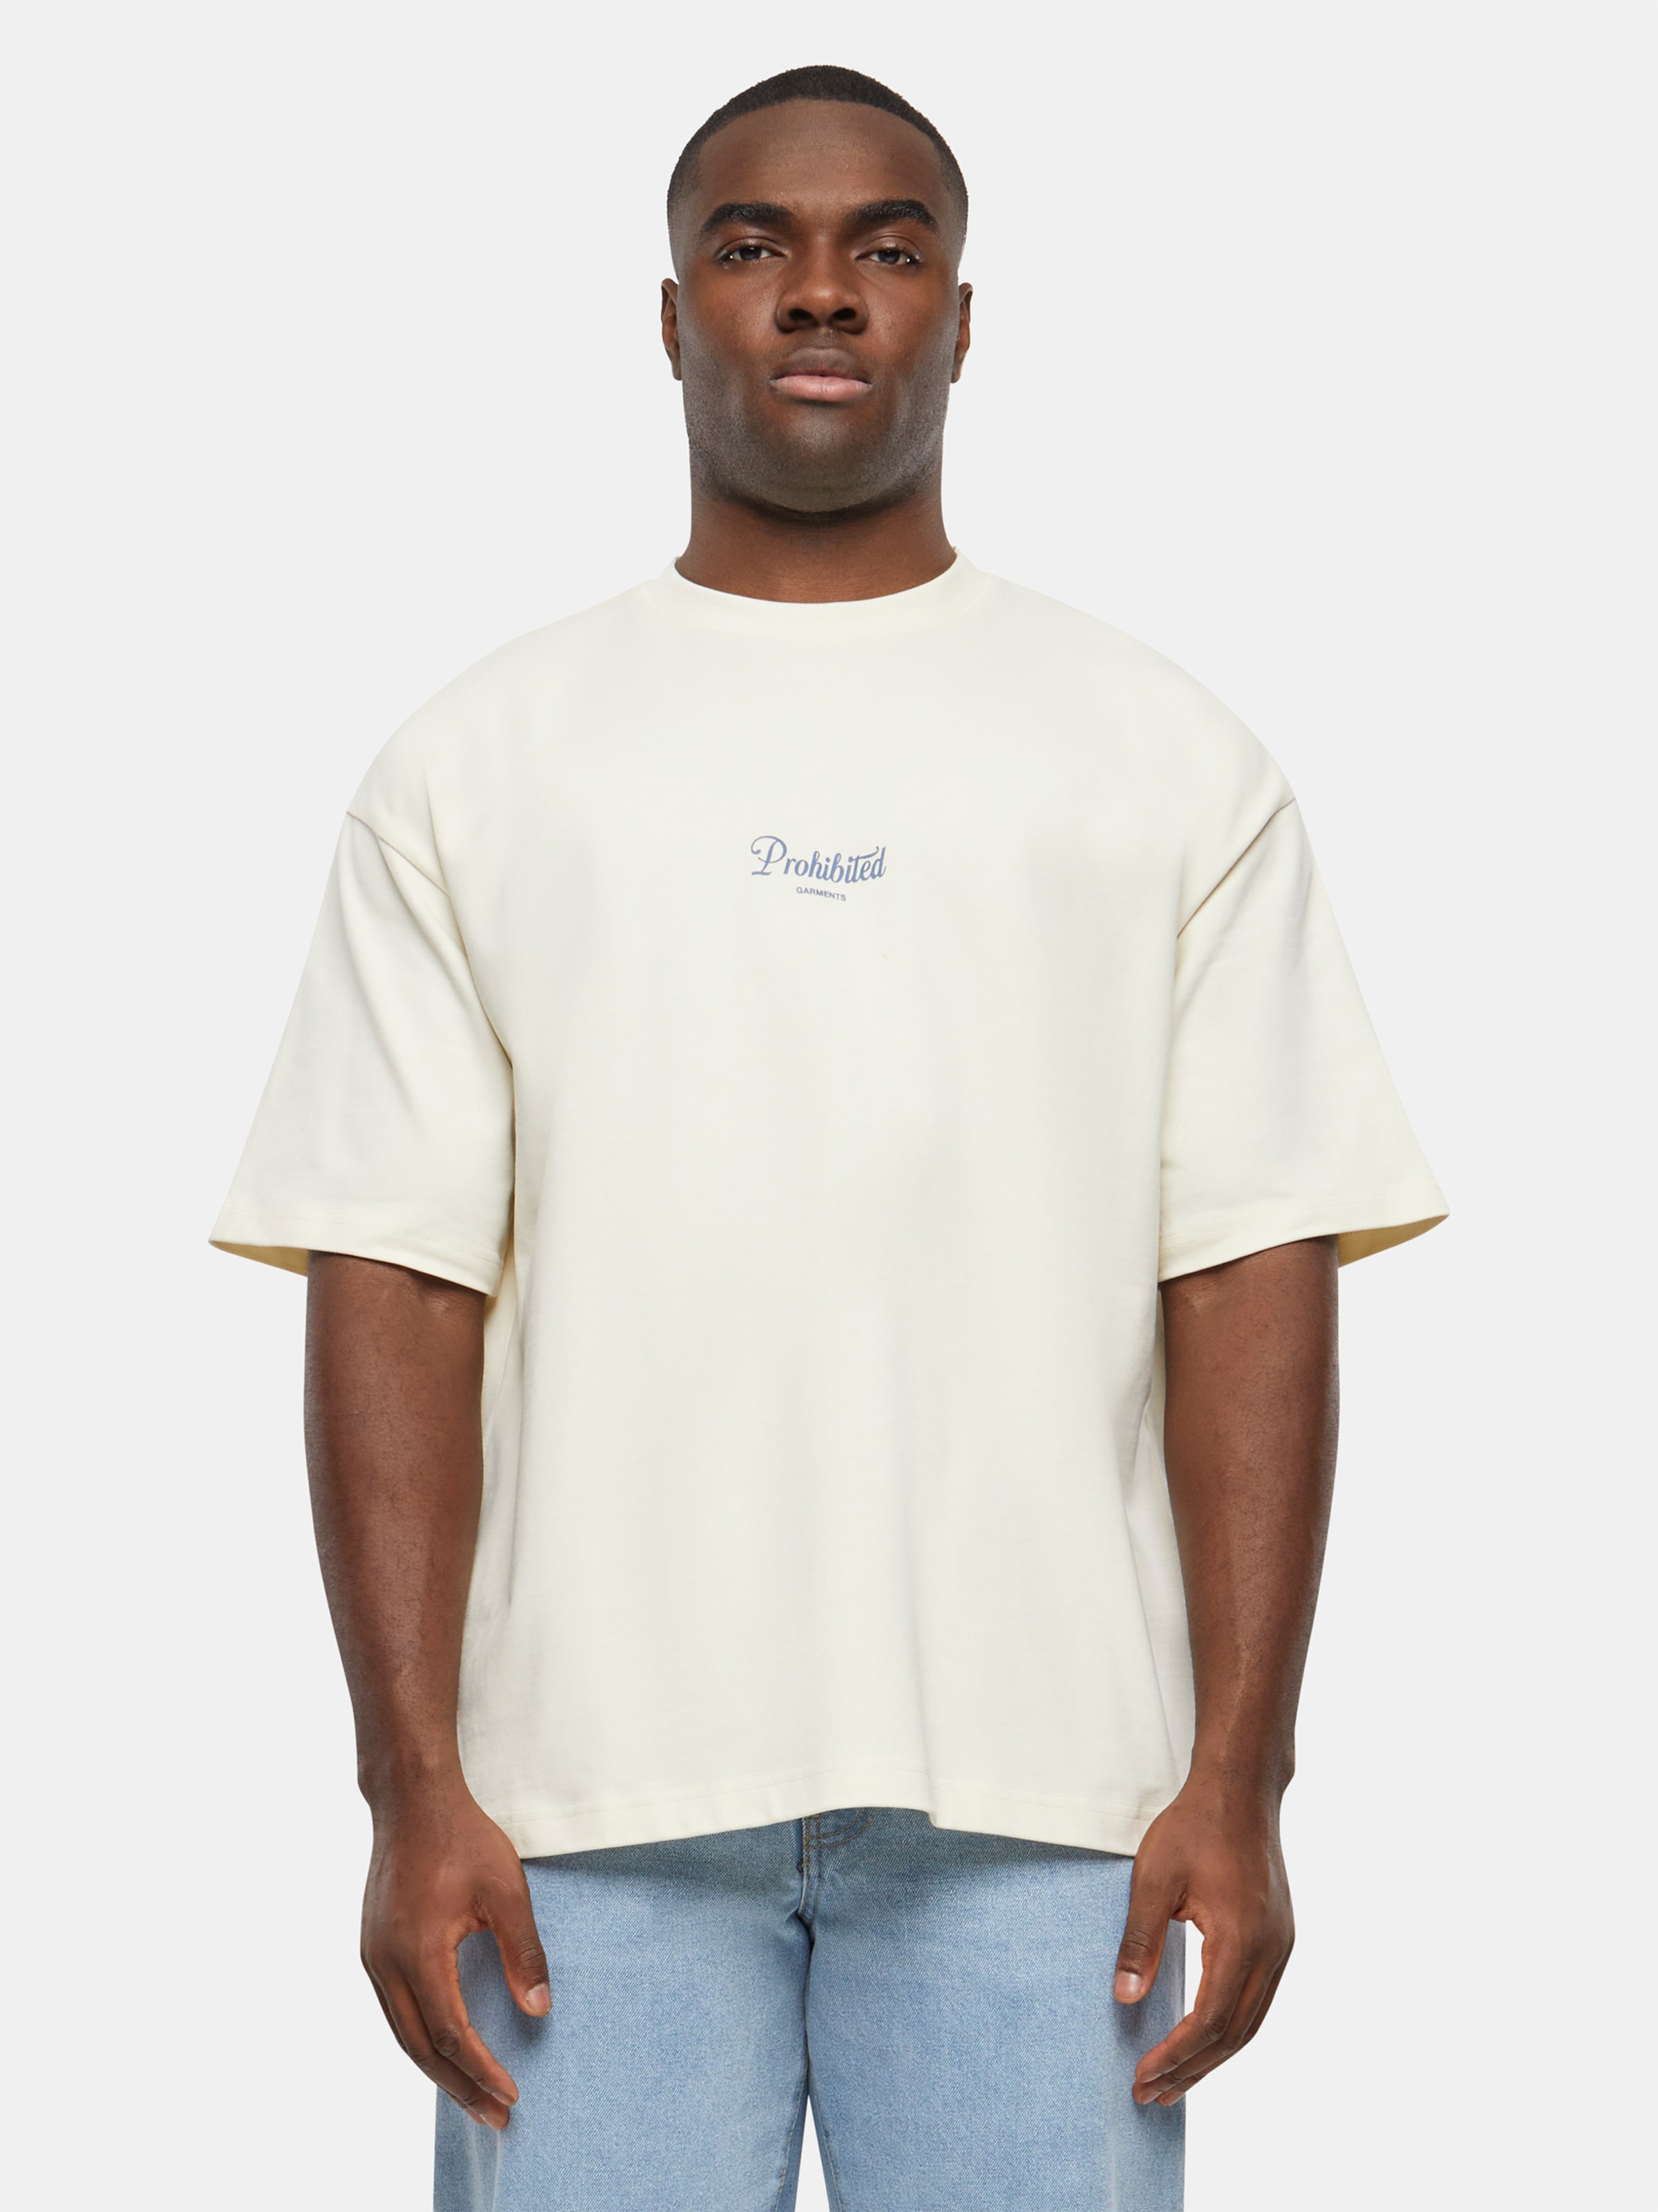 Prohibited PB Garment T Shirts Männer,Unisex op kleur wit, Maat XS